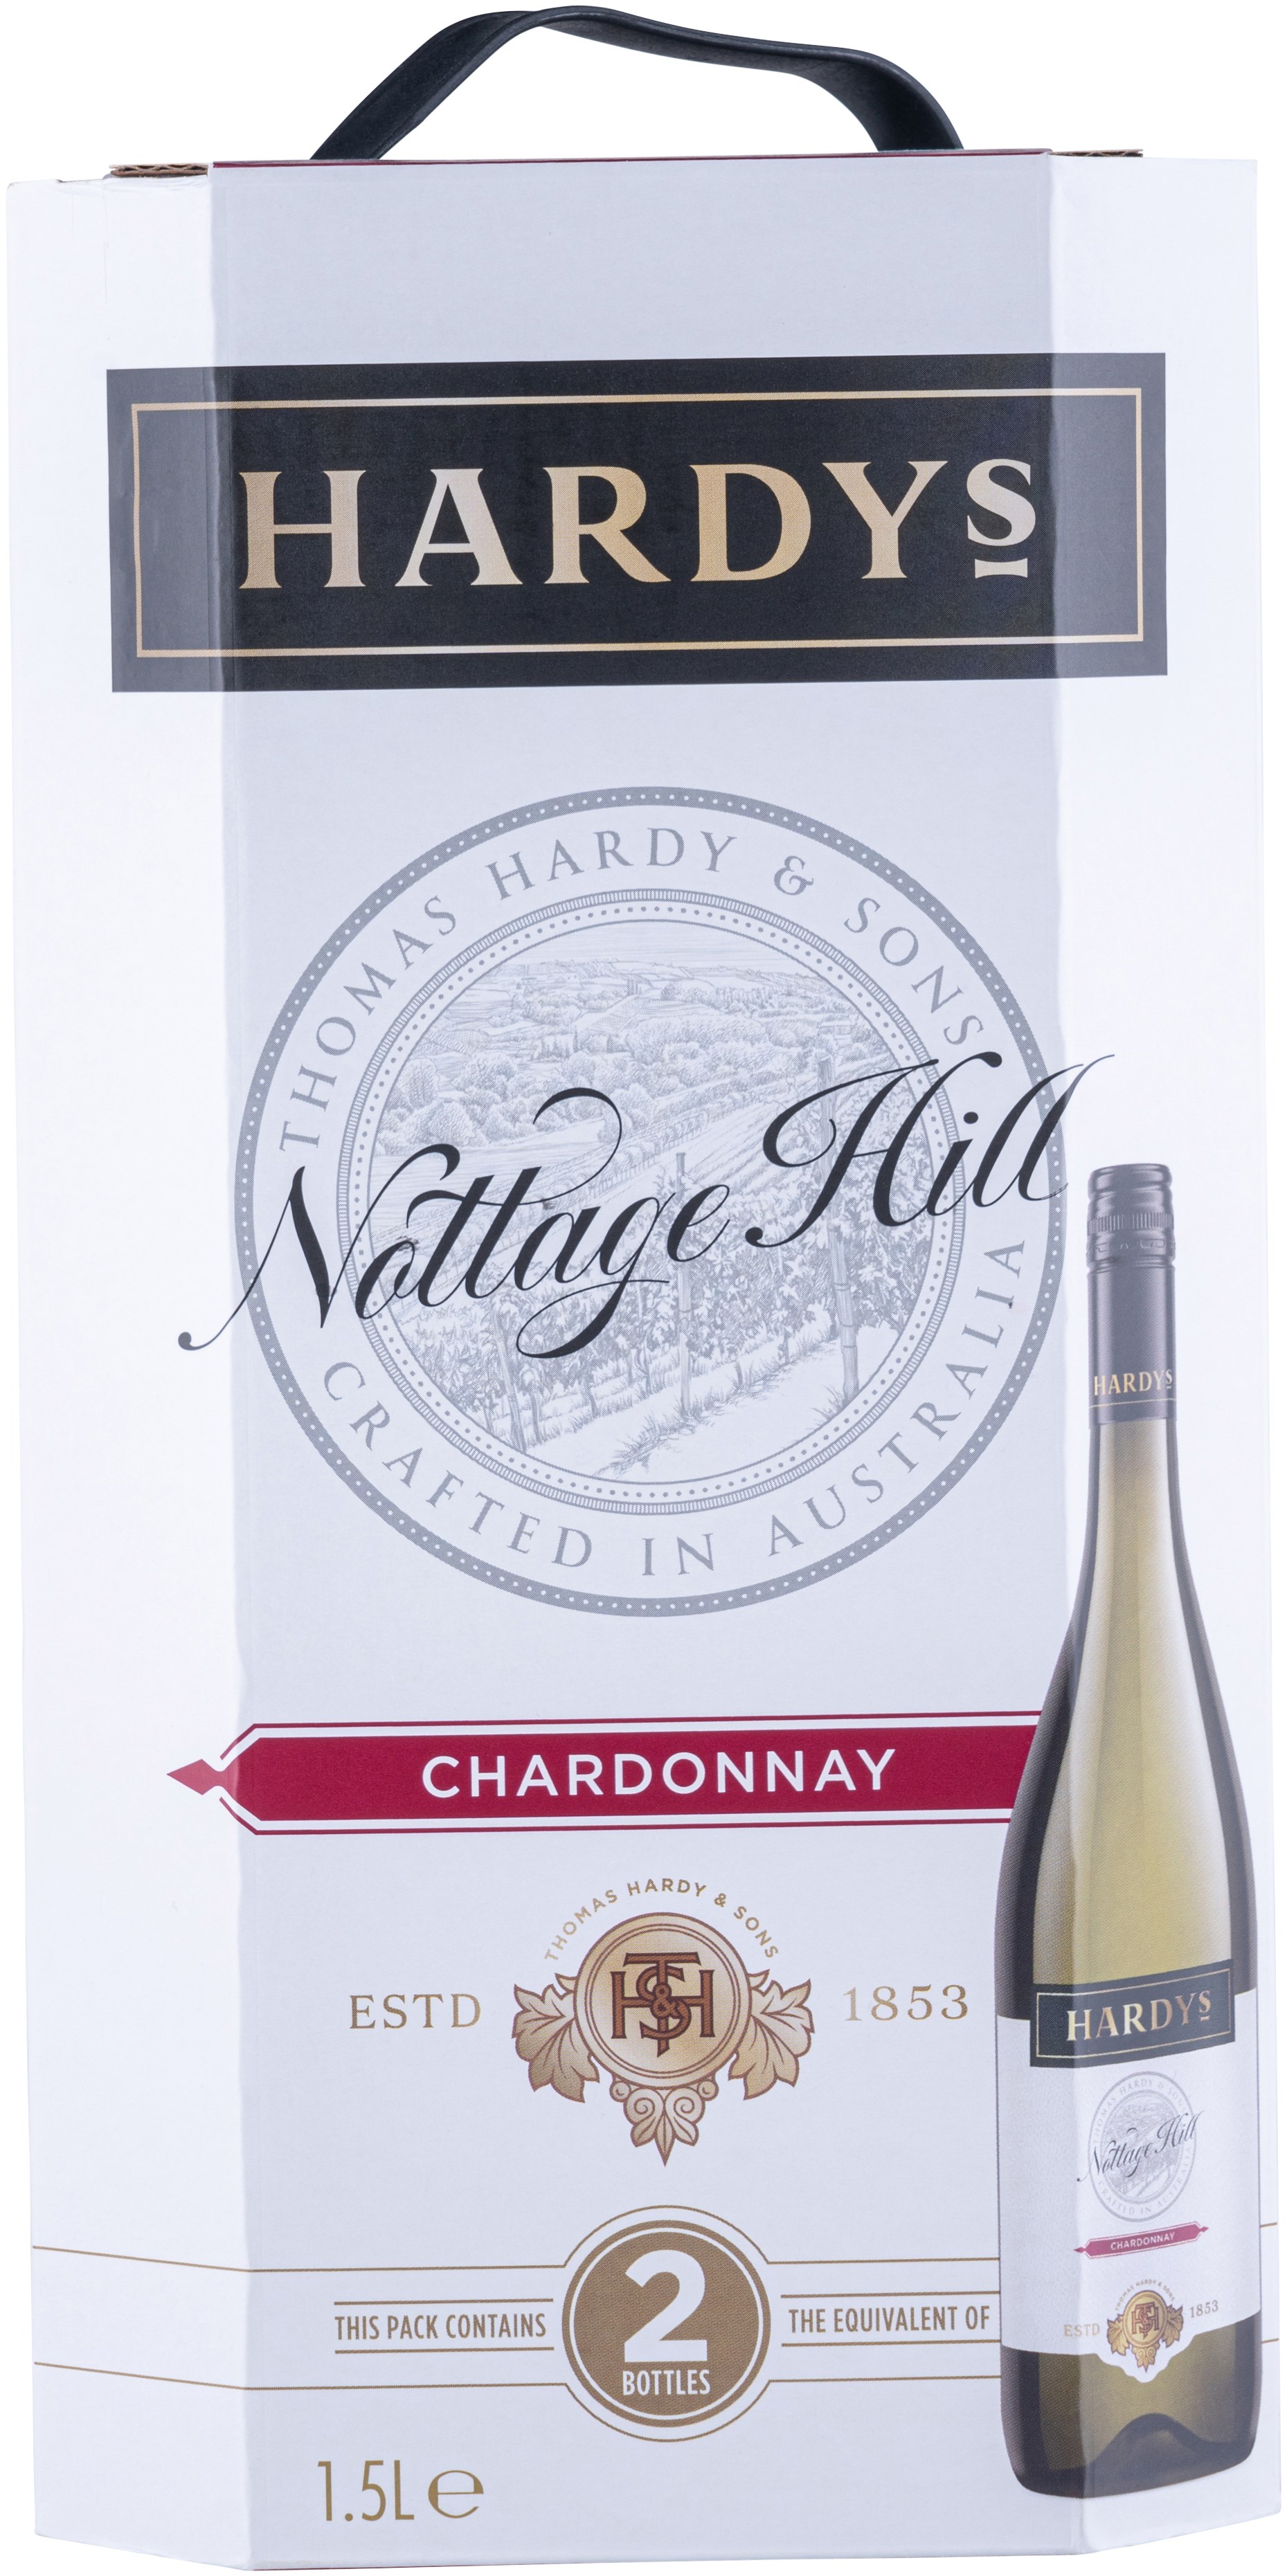 Hardys Nottage Hill Chardonnay 1,5L BIB